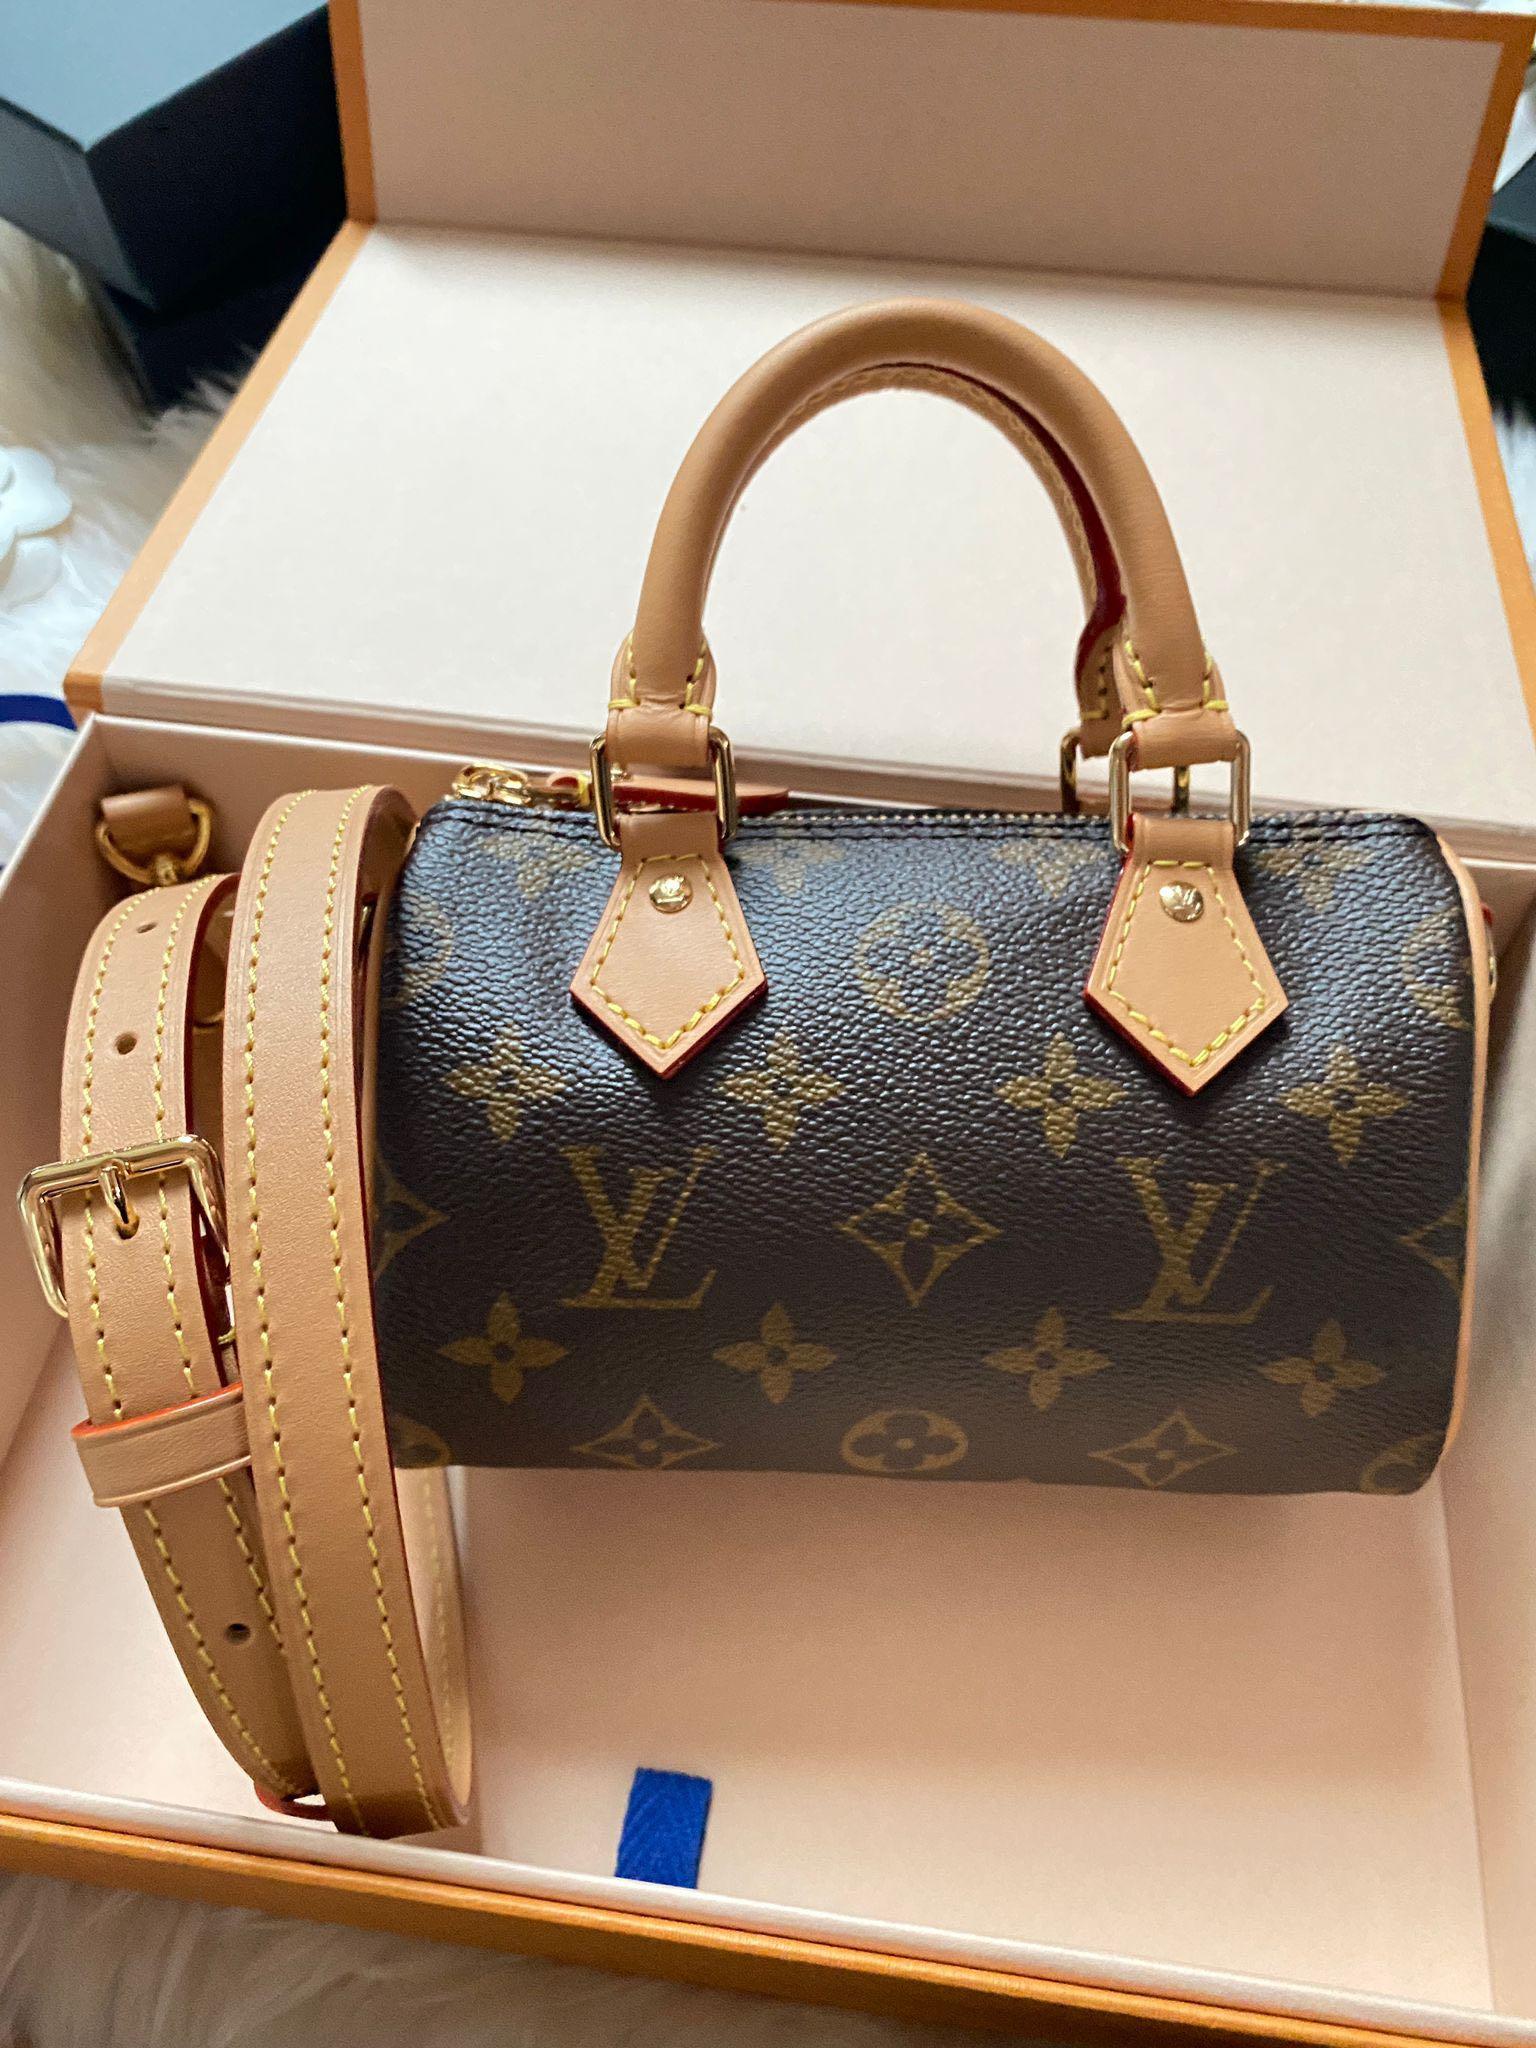 MUST-have designer handbags under 1000!!! #LV #lv #louisvuitton #louis